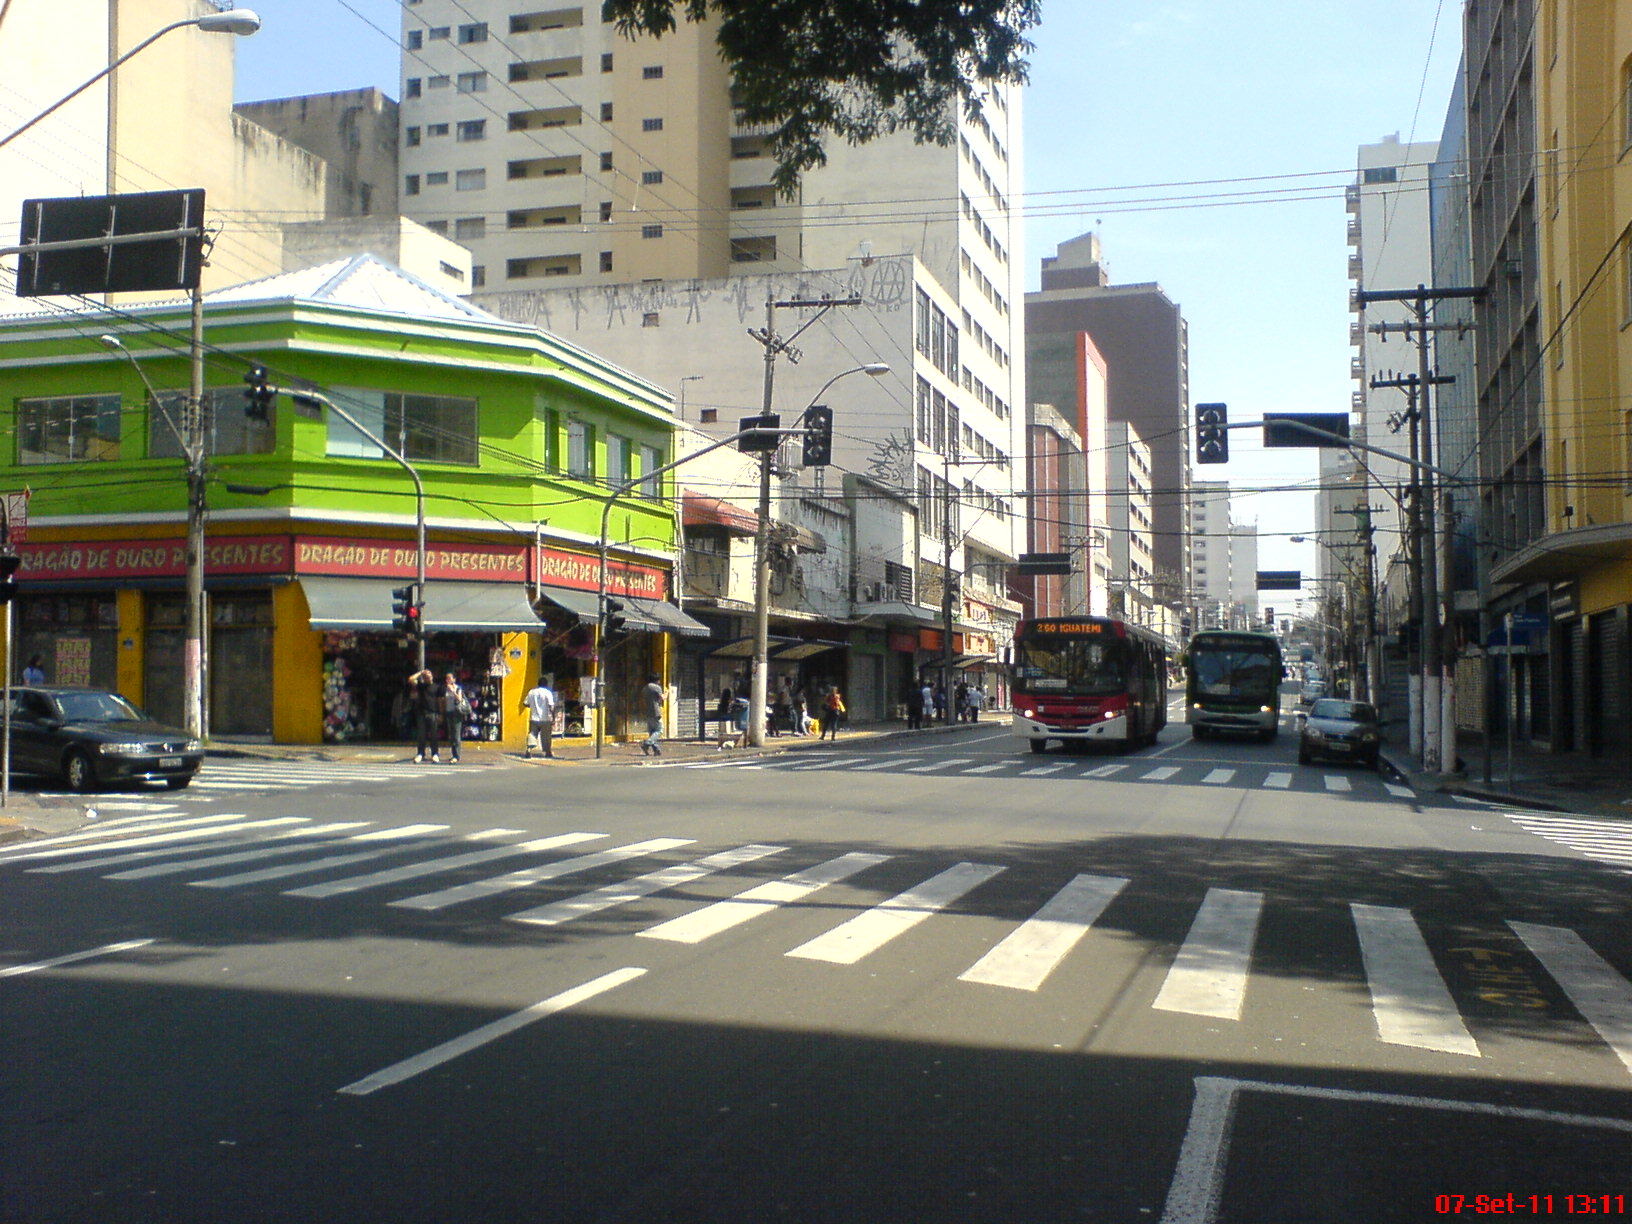 File:Av Campos Sales e Cruzamento da Rua Jose Paulino - Campinas SP -  panoramio.jpg - Wikimedia Commons